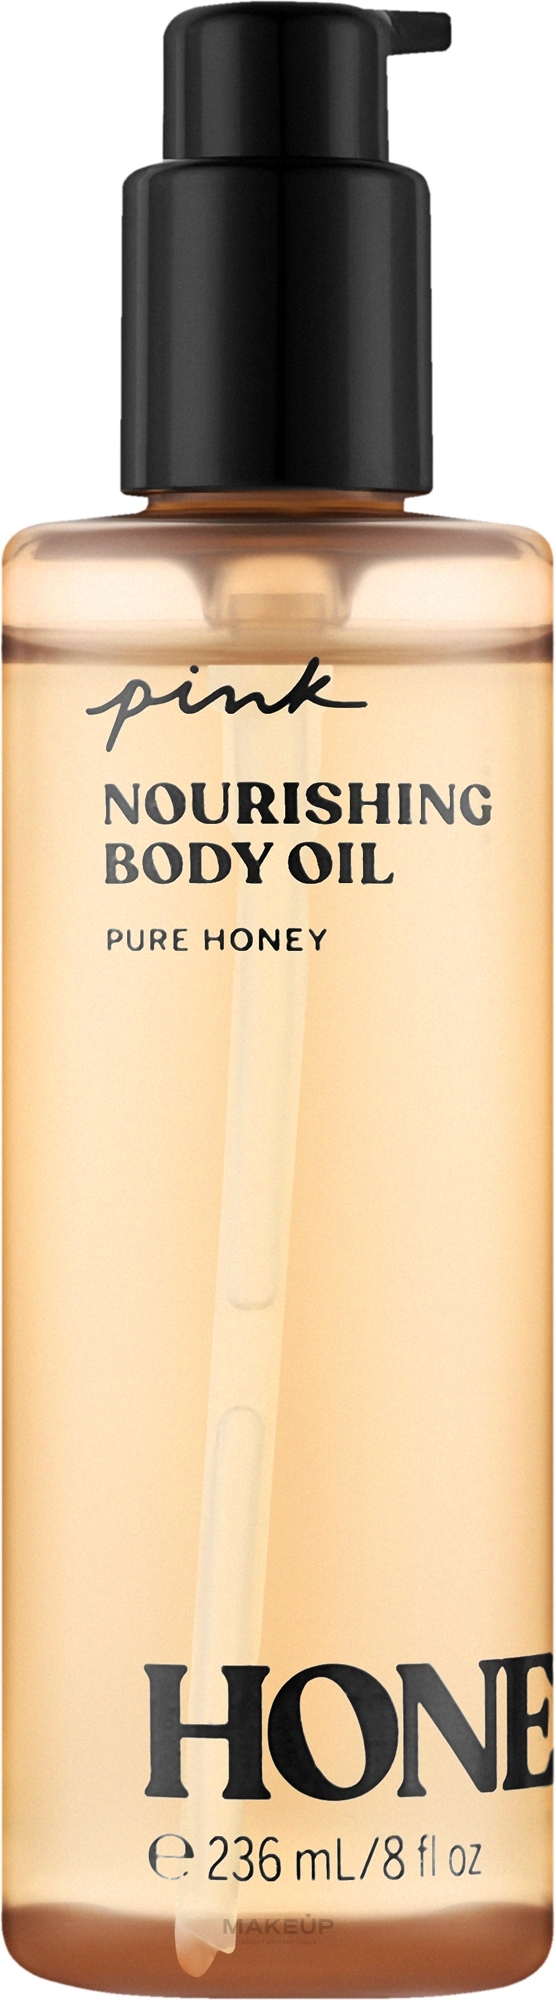 Увлажняющее масло для тела - Victoria's Secret Pink Nourishing Body Oil Pure Honey — фото 236ml